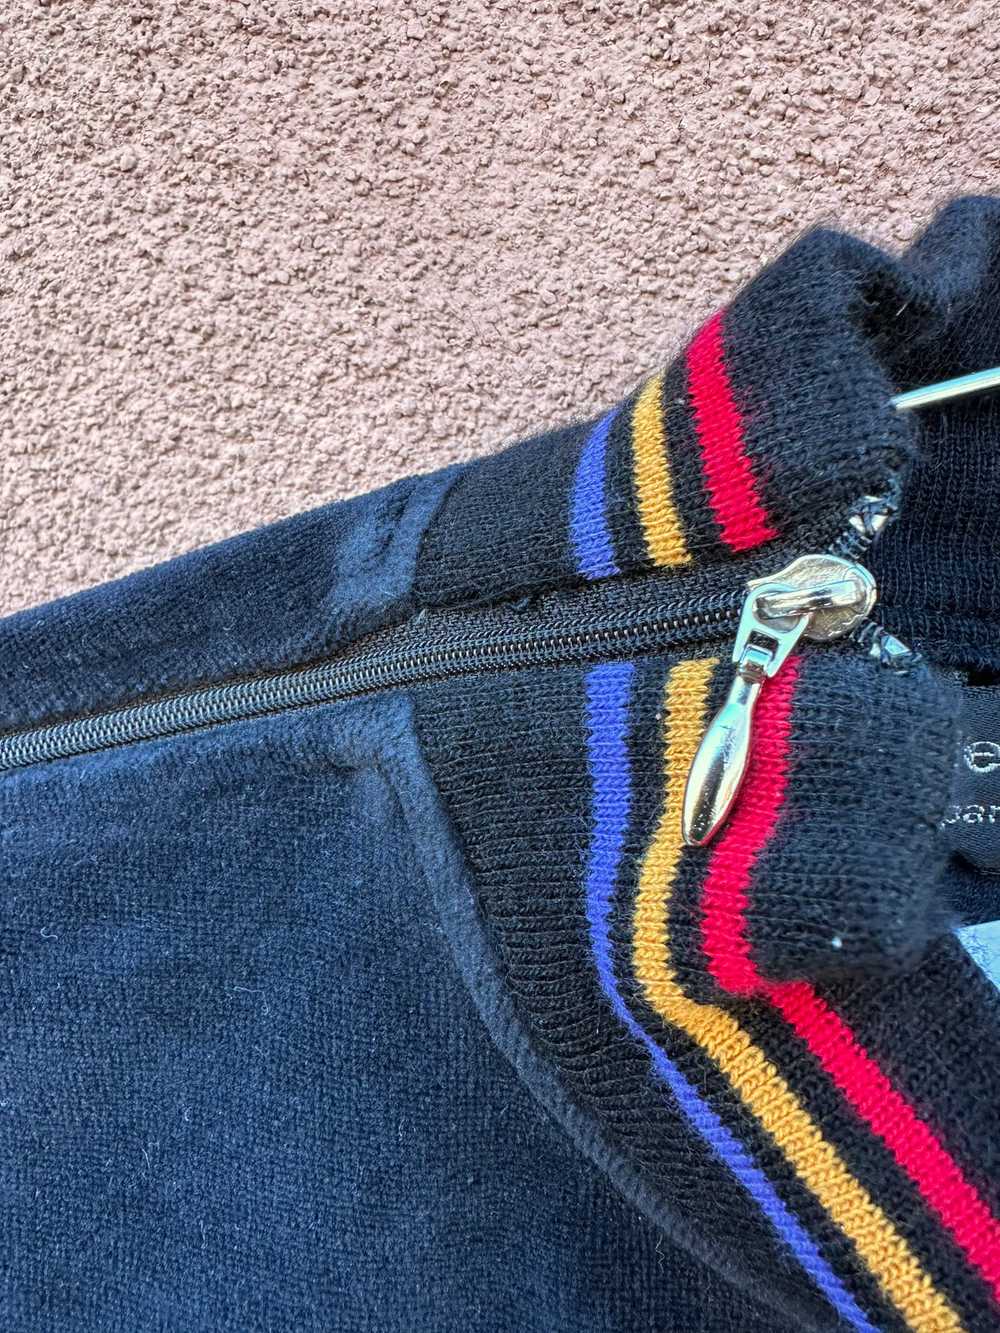 Pierre Cardin Velveteen Sweatshirt with Pockets - image 2